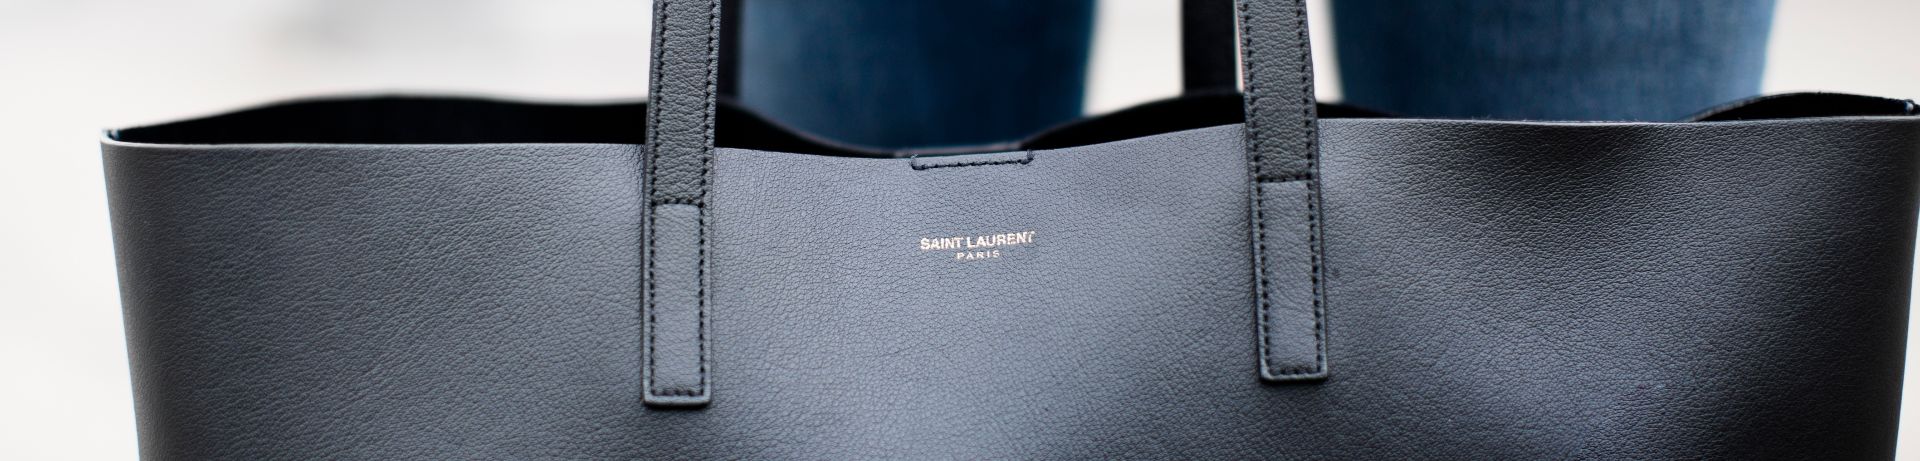 Saint Laurent Tote Bag Review – The Anna Edit